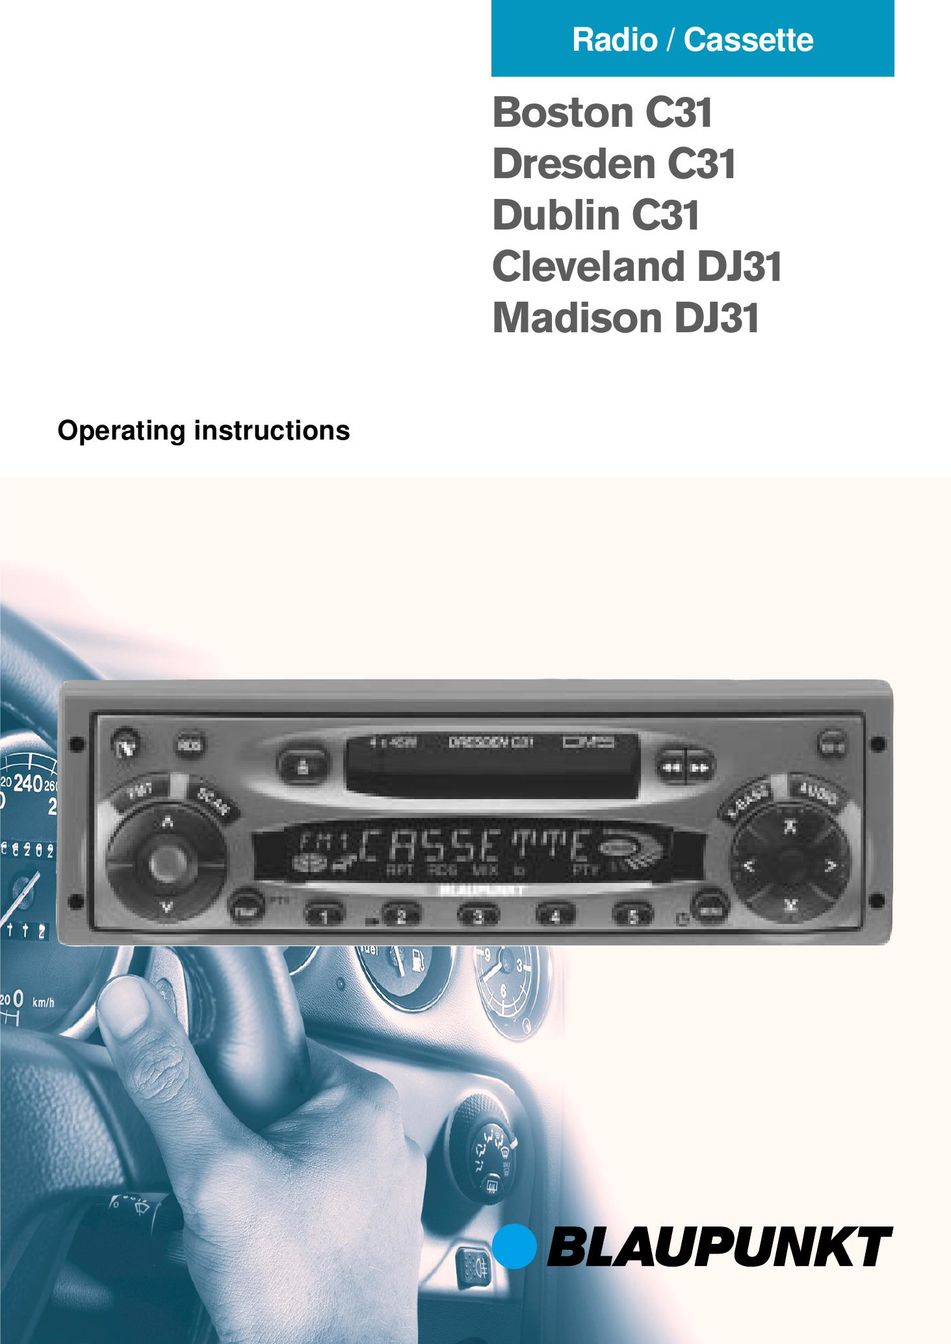 Blaupunkt Madison DJ31 Portable Radio User Manual